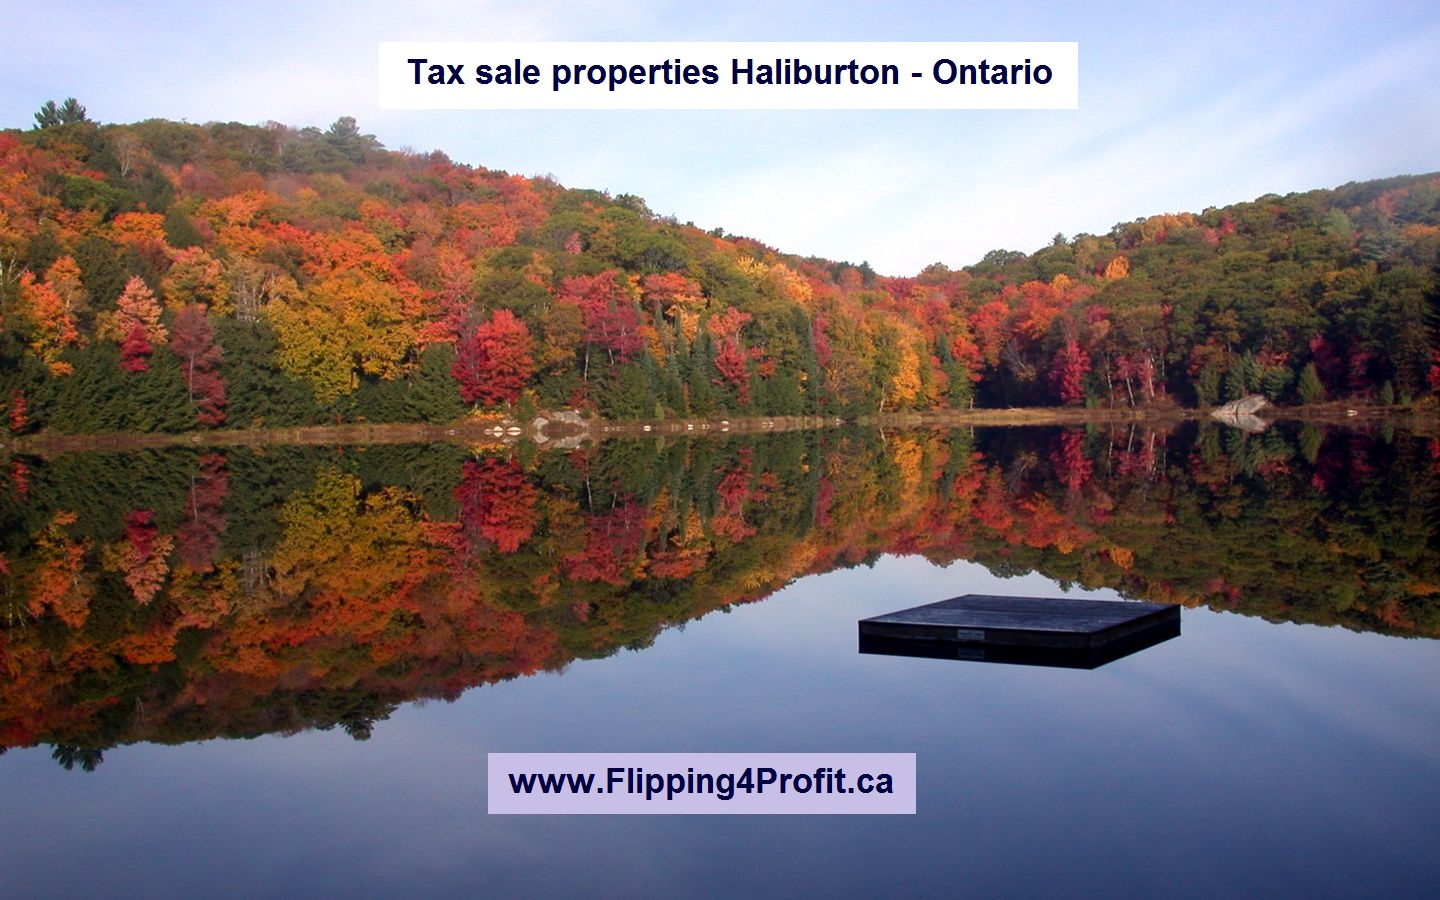 Tax sale properties Haliburton - Ontario